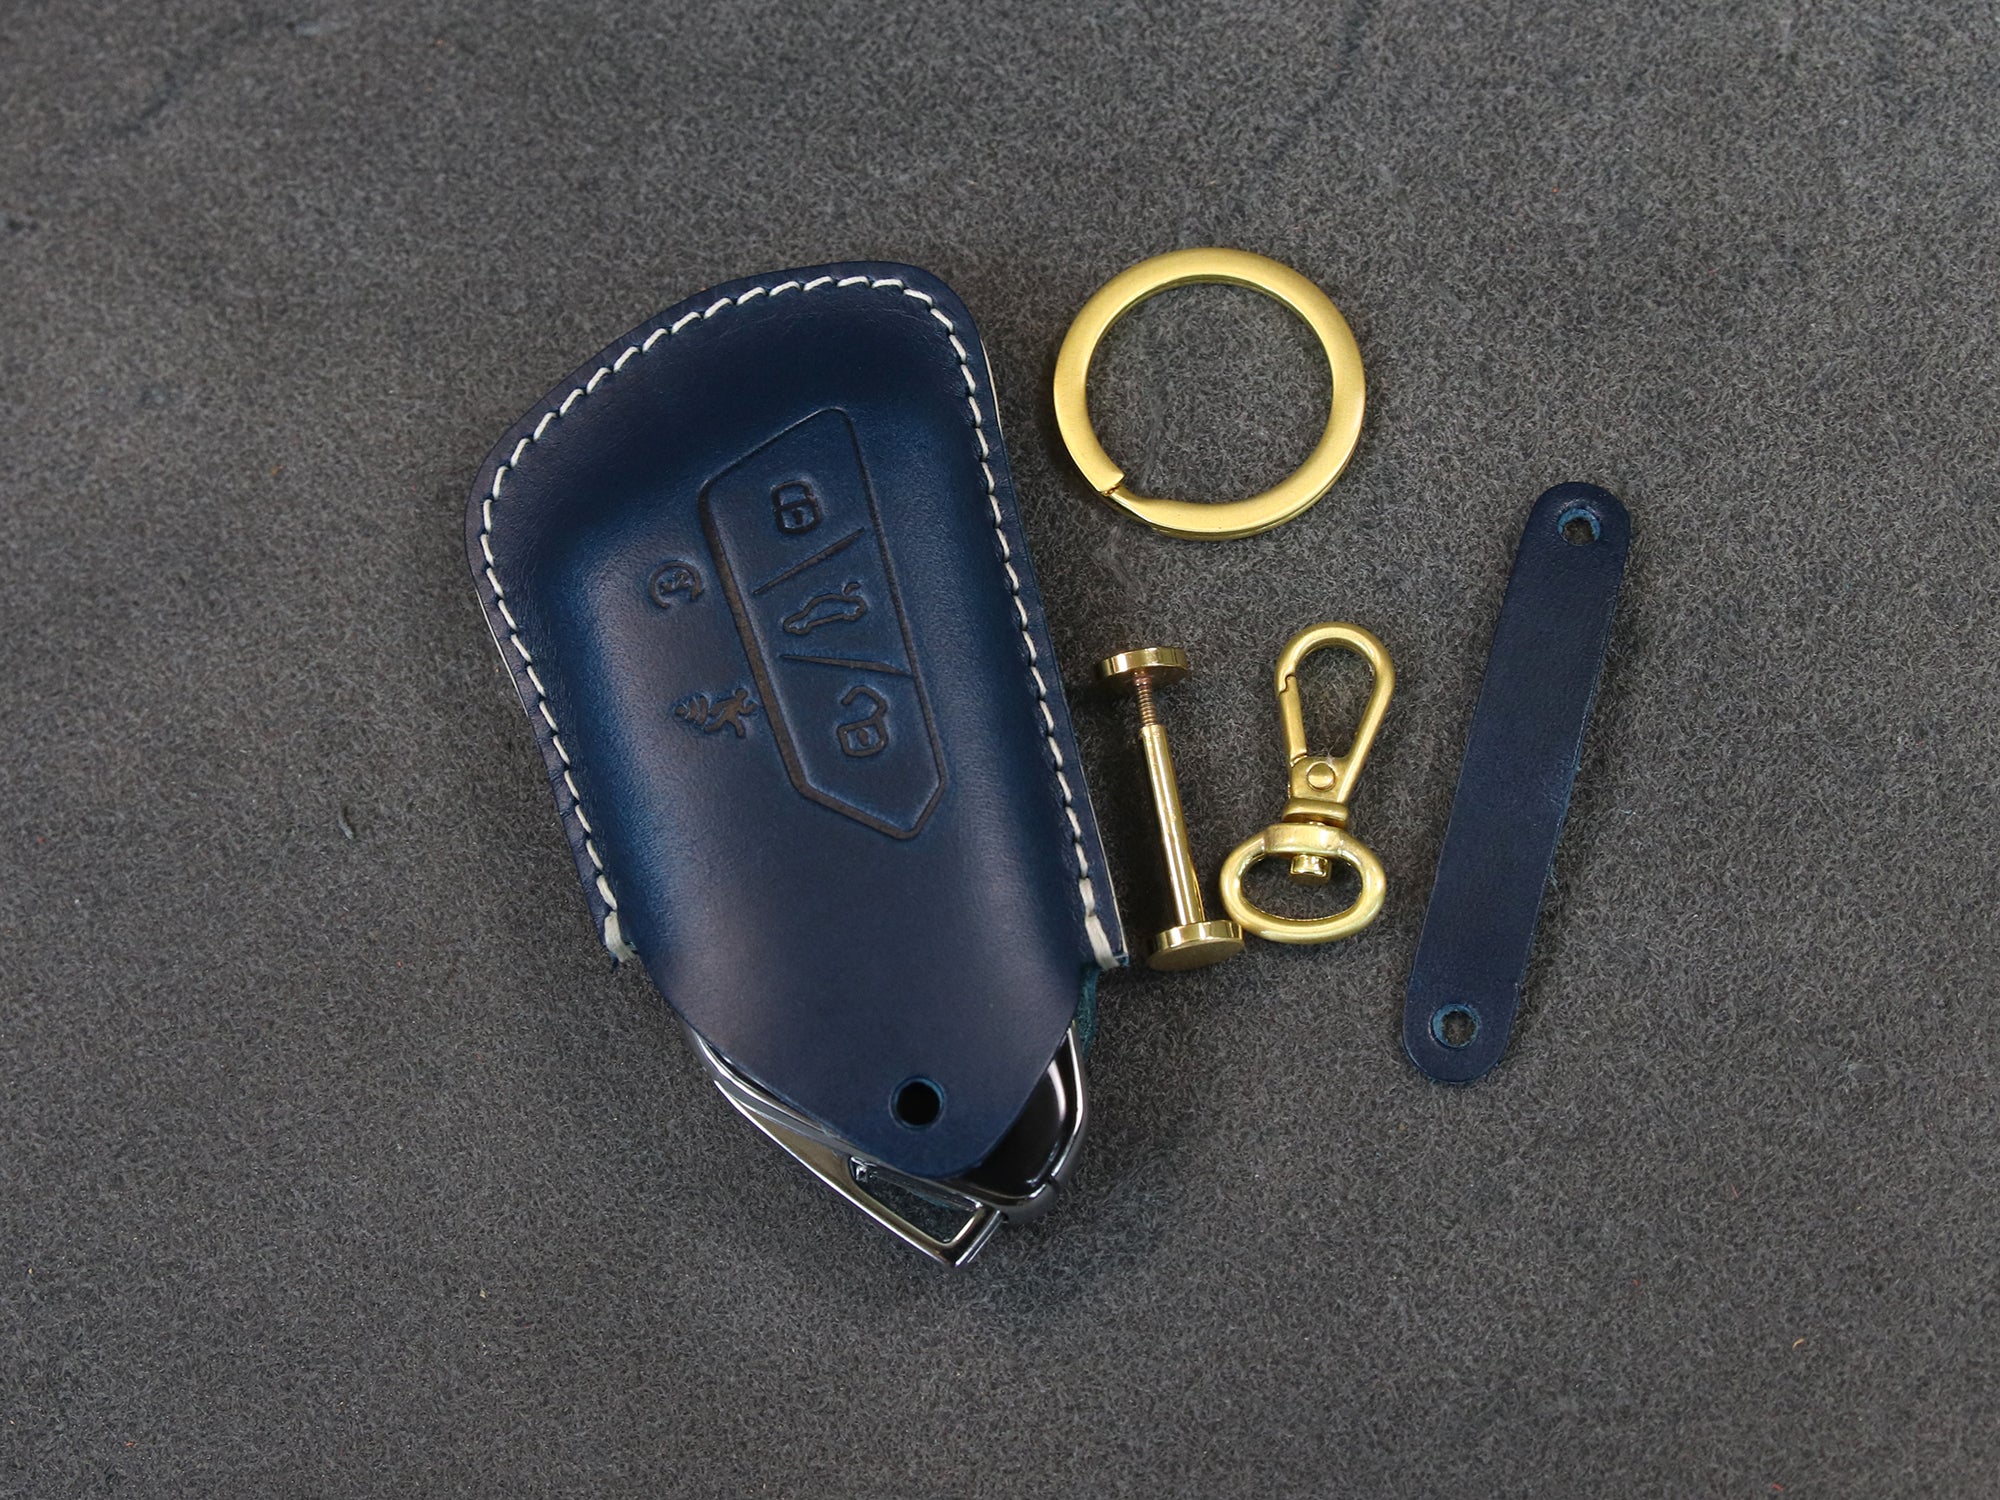 VW Key Fob Leather Case - Leather Brut